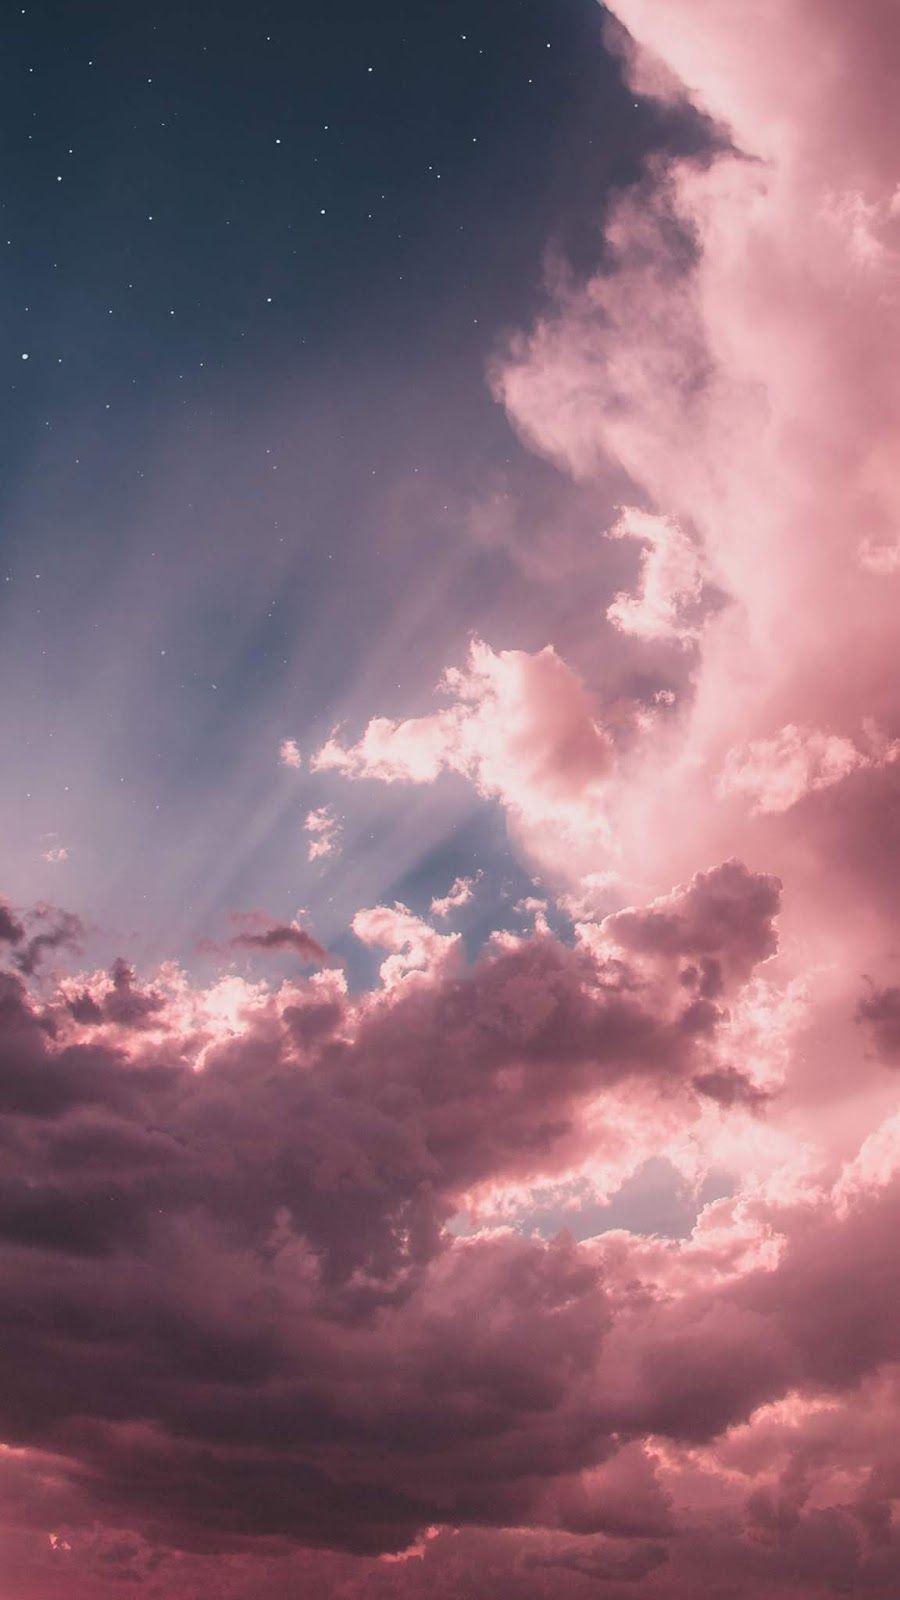 Pink clouds. BoY. iPhone wallpaper, Cloud wallpaper